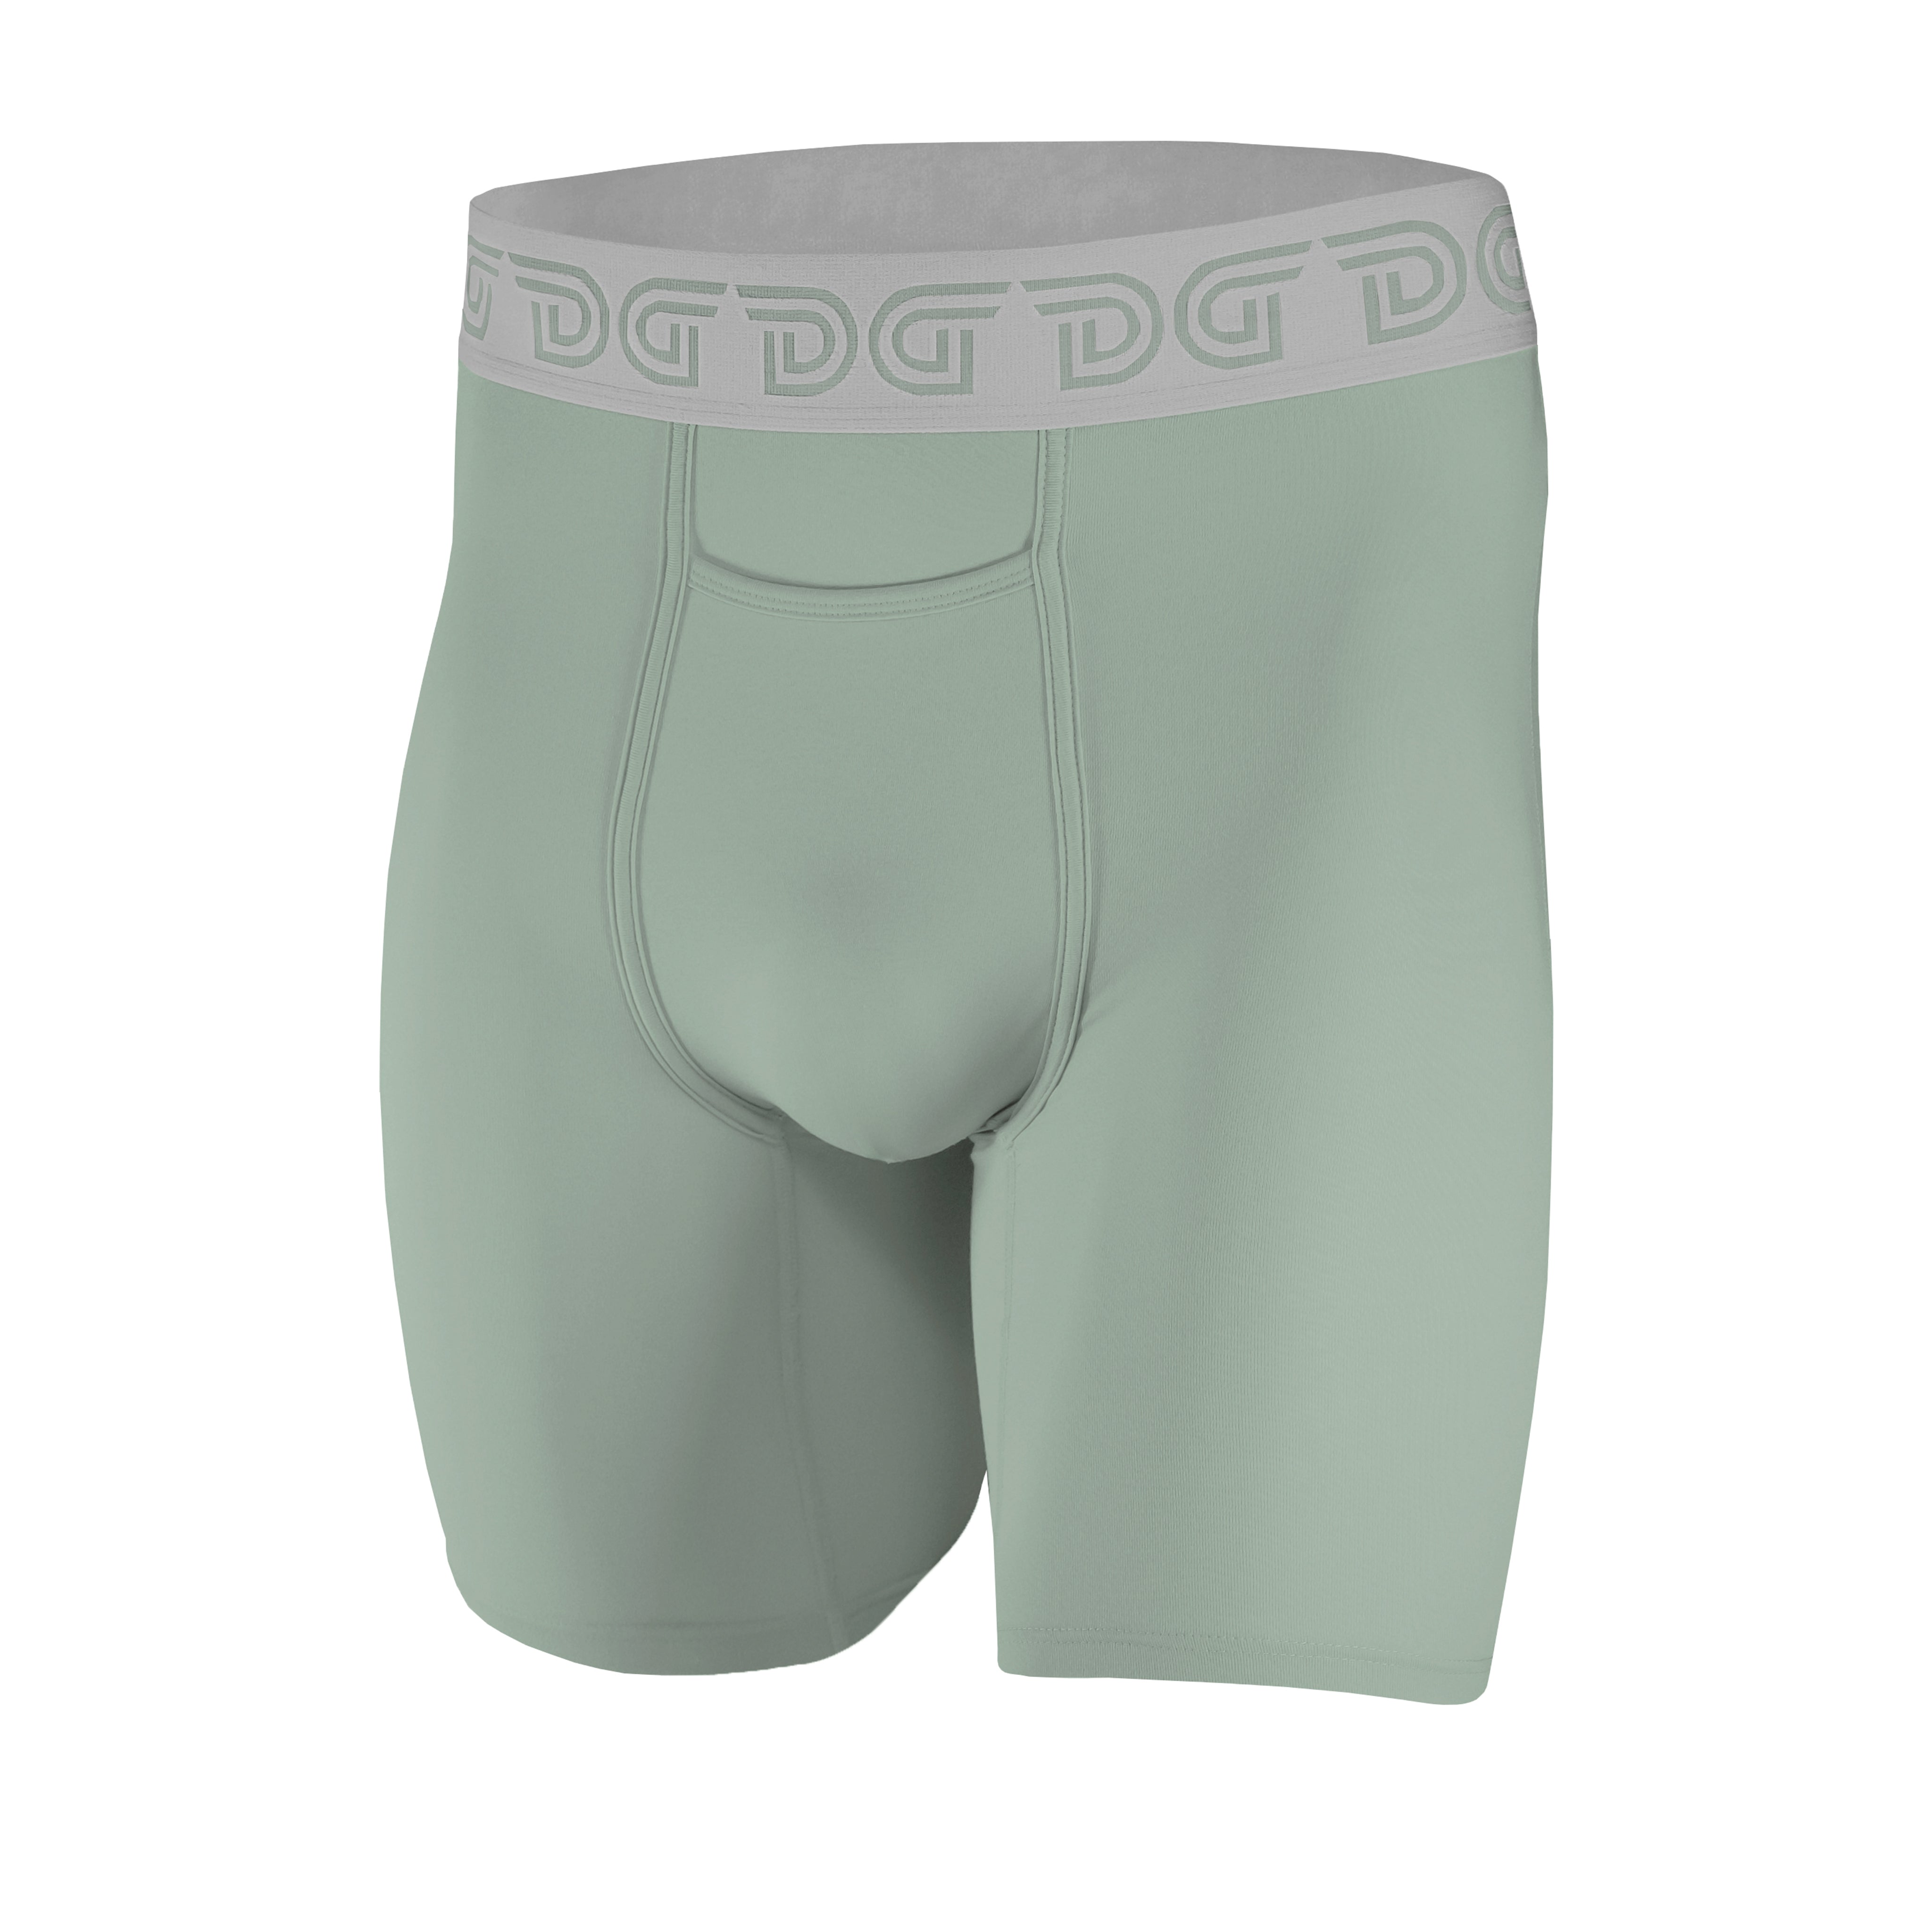  Men's Underwear - Greens / Men's Underwear / Men's Clothing:  Clothing, Shoes & Jewelry